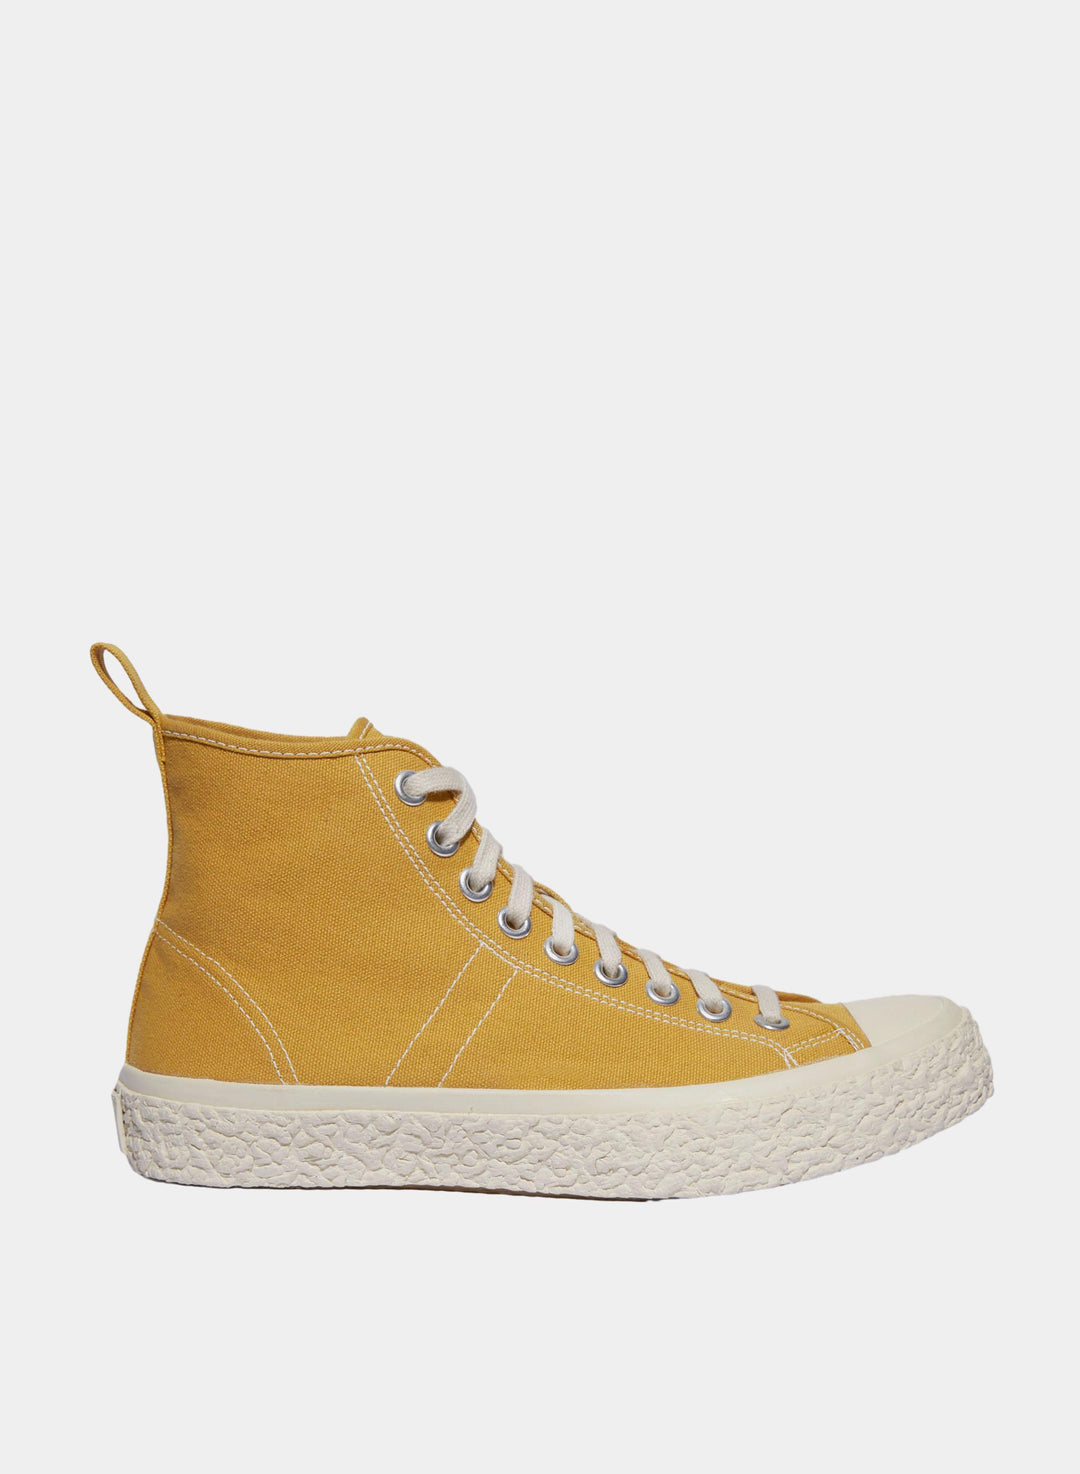 YMC High Top Sneaker - Yellow